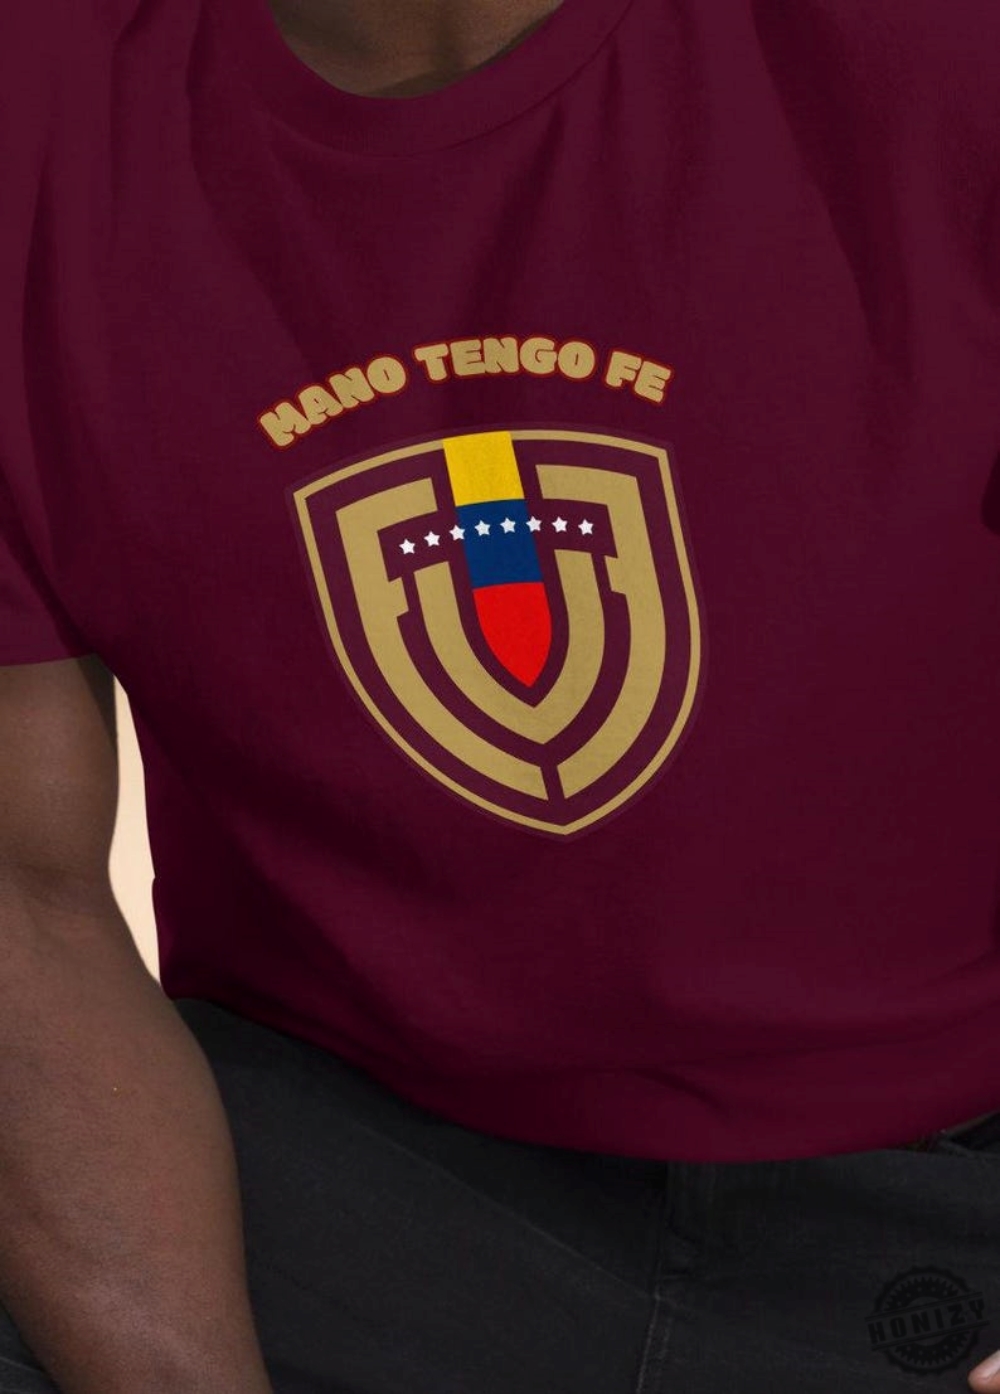 Mano Tengo Fe Shirt Venezuela Soccer Team Sweatshirt La Vinotinto Hoodie Copa America Mundial De Futbol Tshirt Venezuela National Soccer Team Unisex Classic Shirt